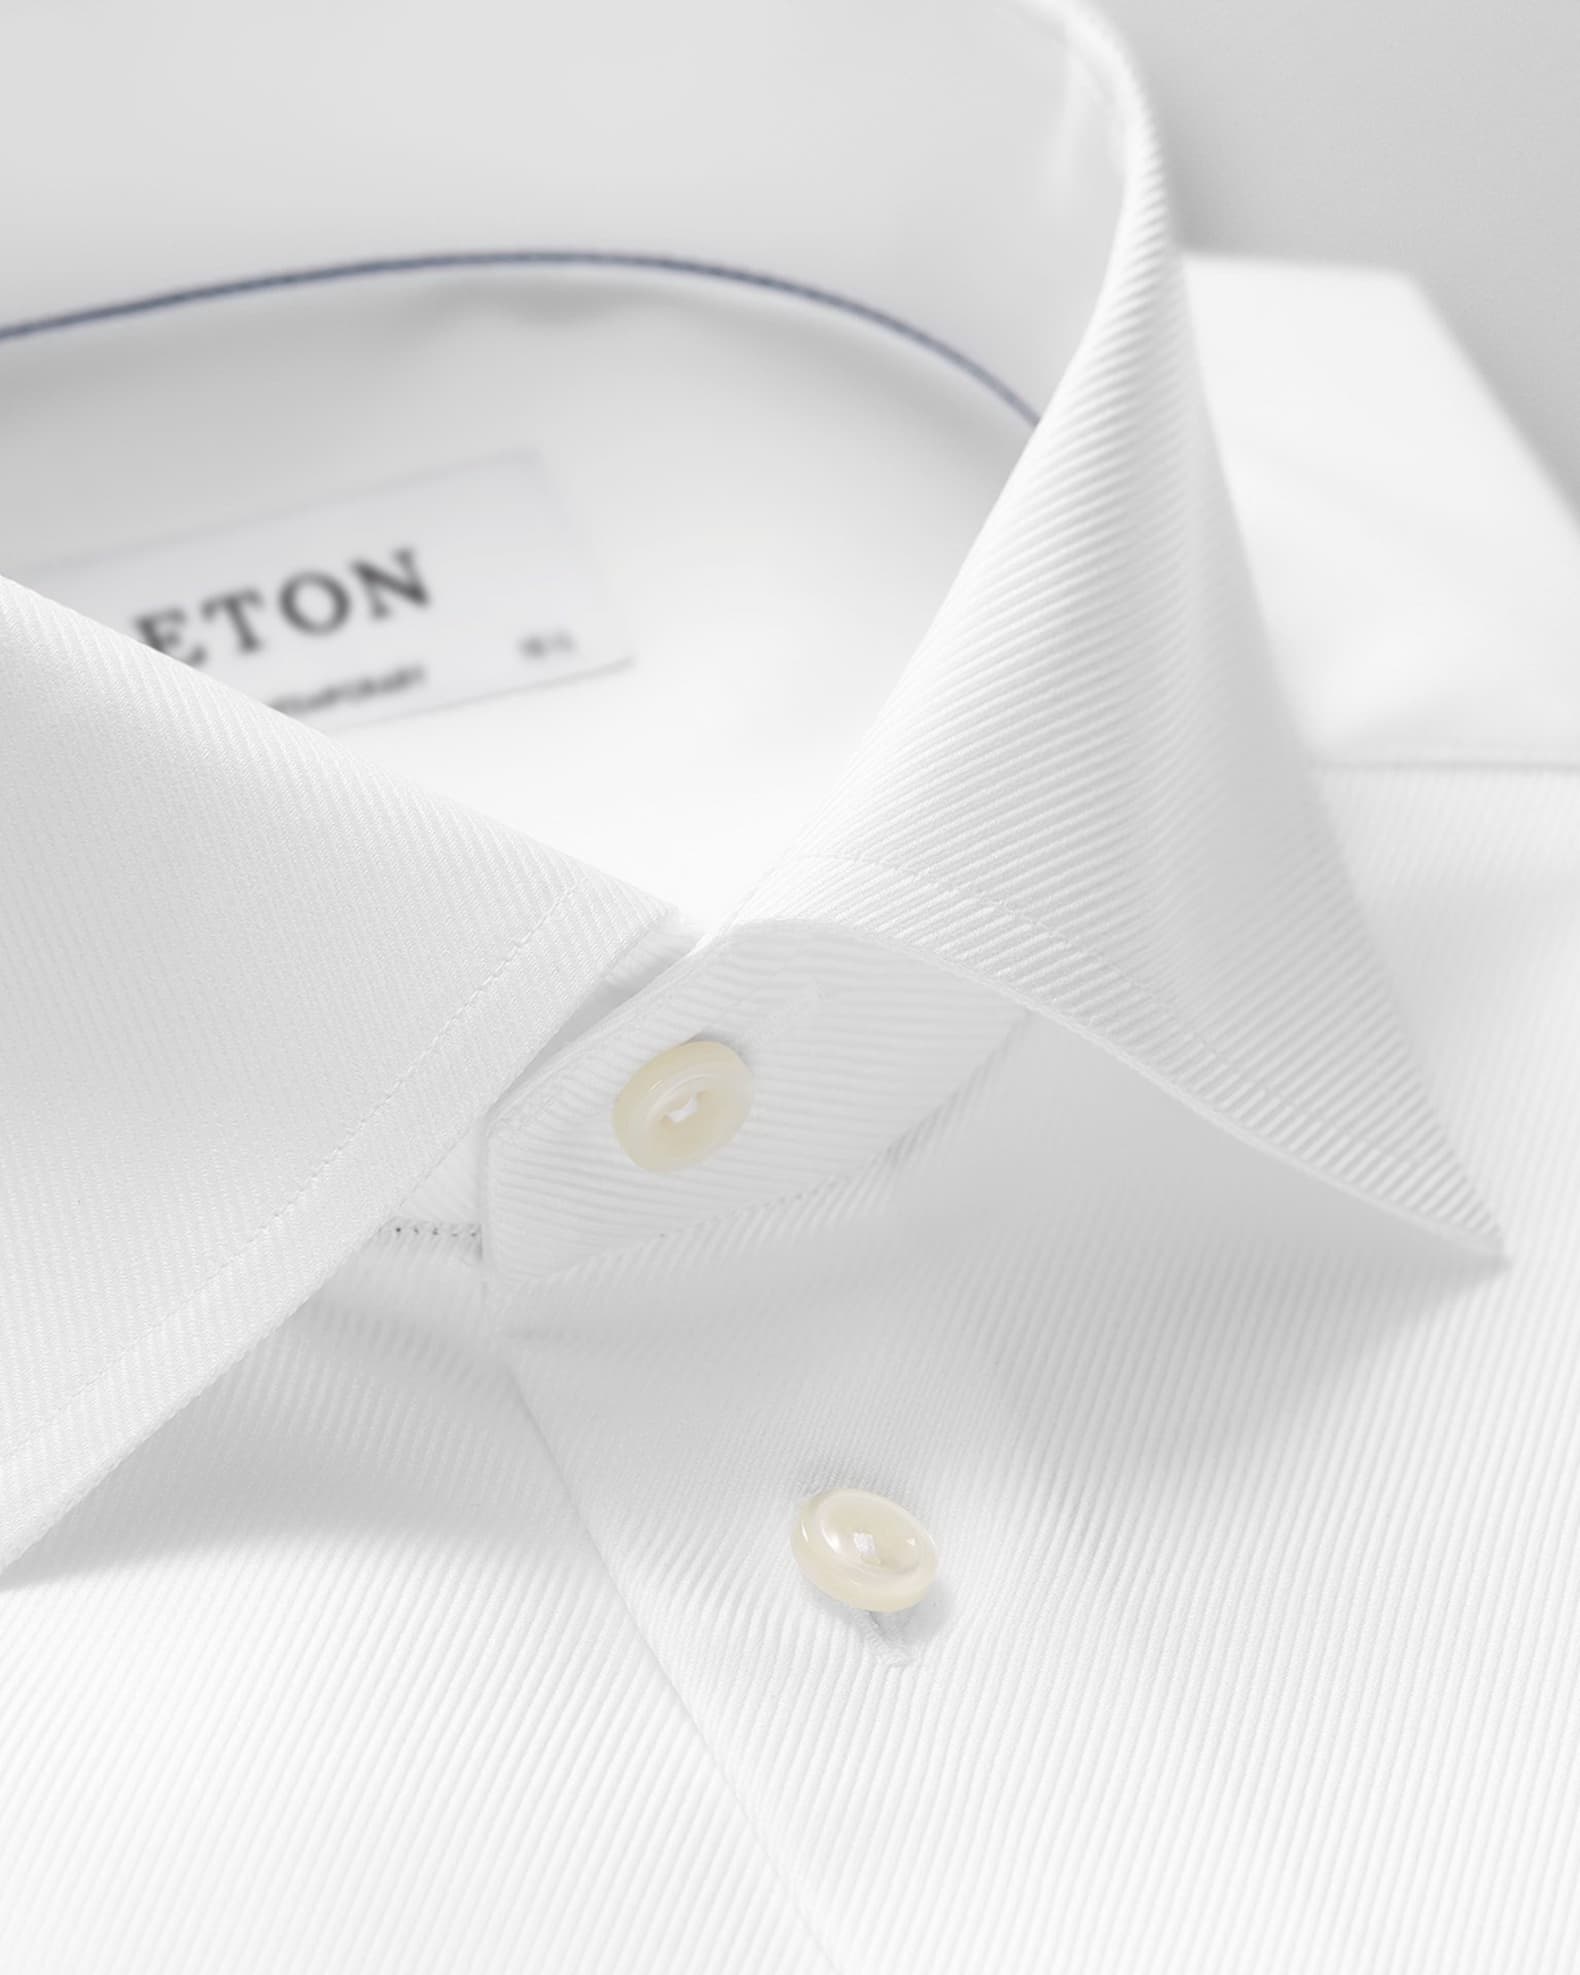 Eton Contemporary-Fit Cavalry Twill Dress Shirt | Neiman Marcus